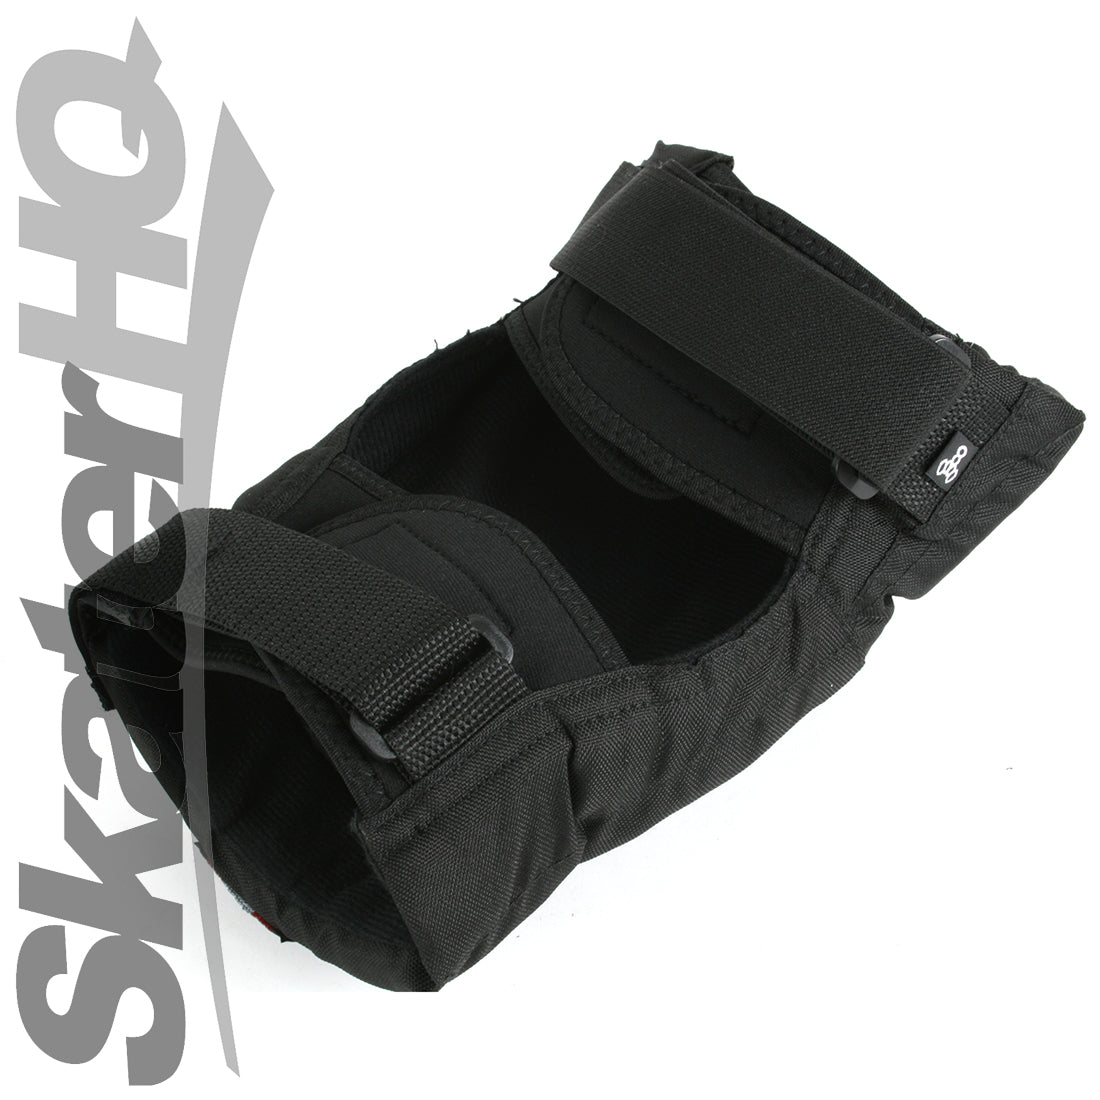 Triple 8 Park Knee/Elbow Set Protective Gear